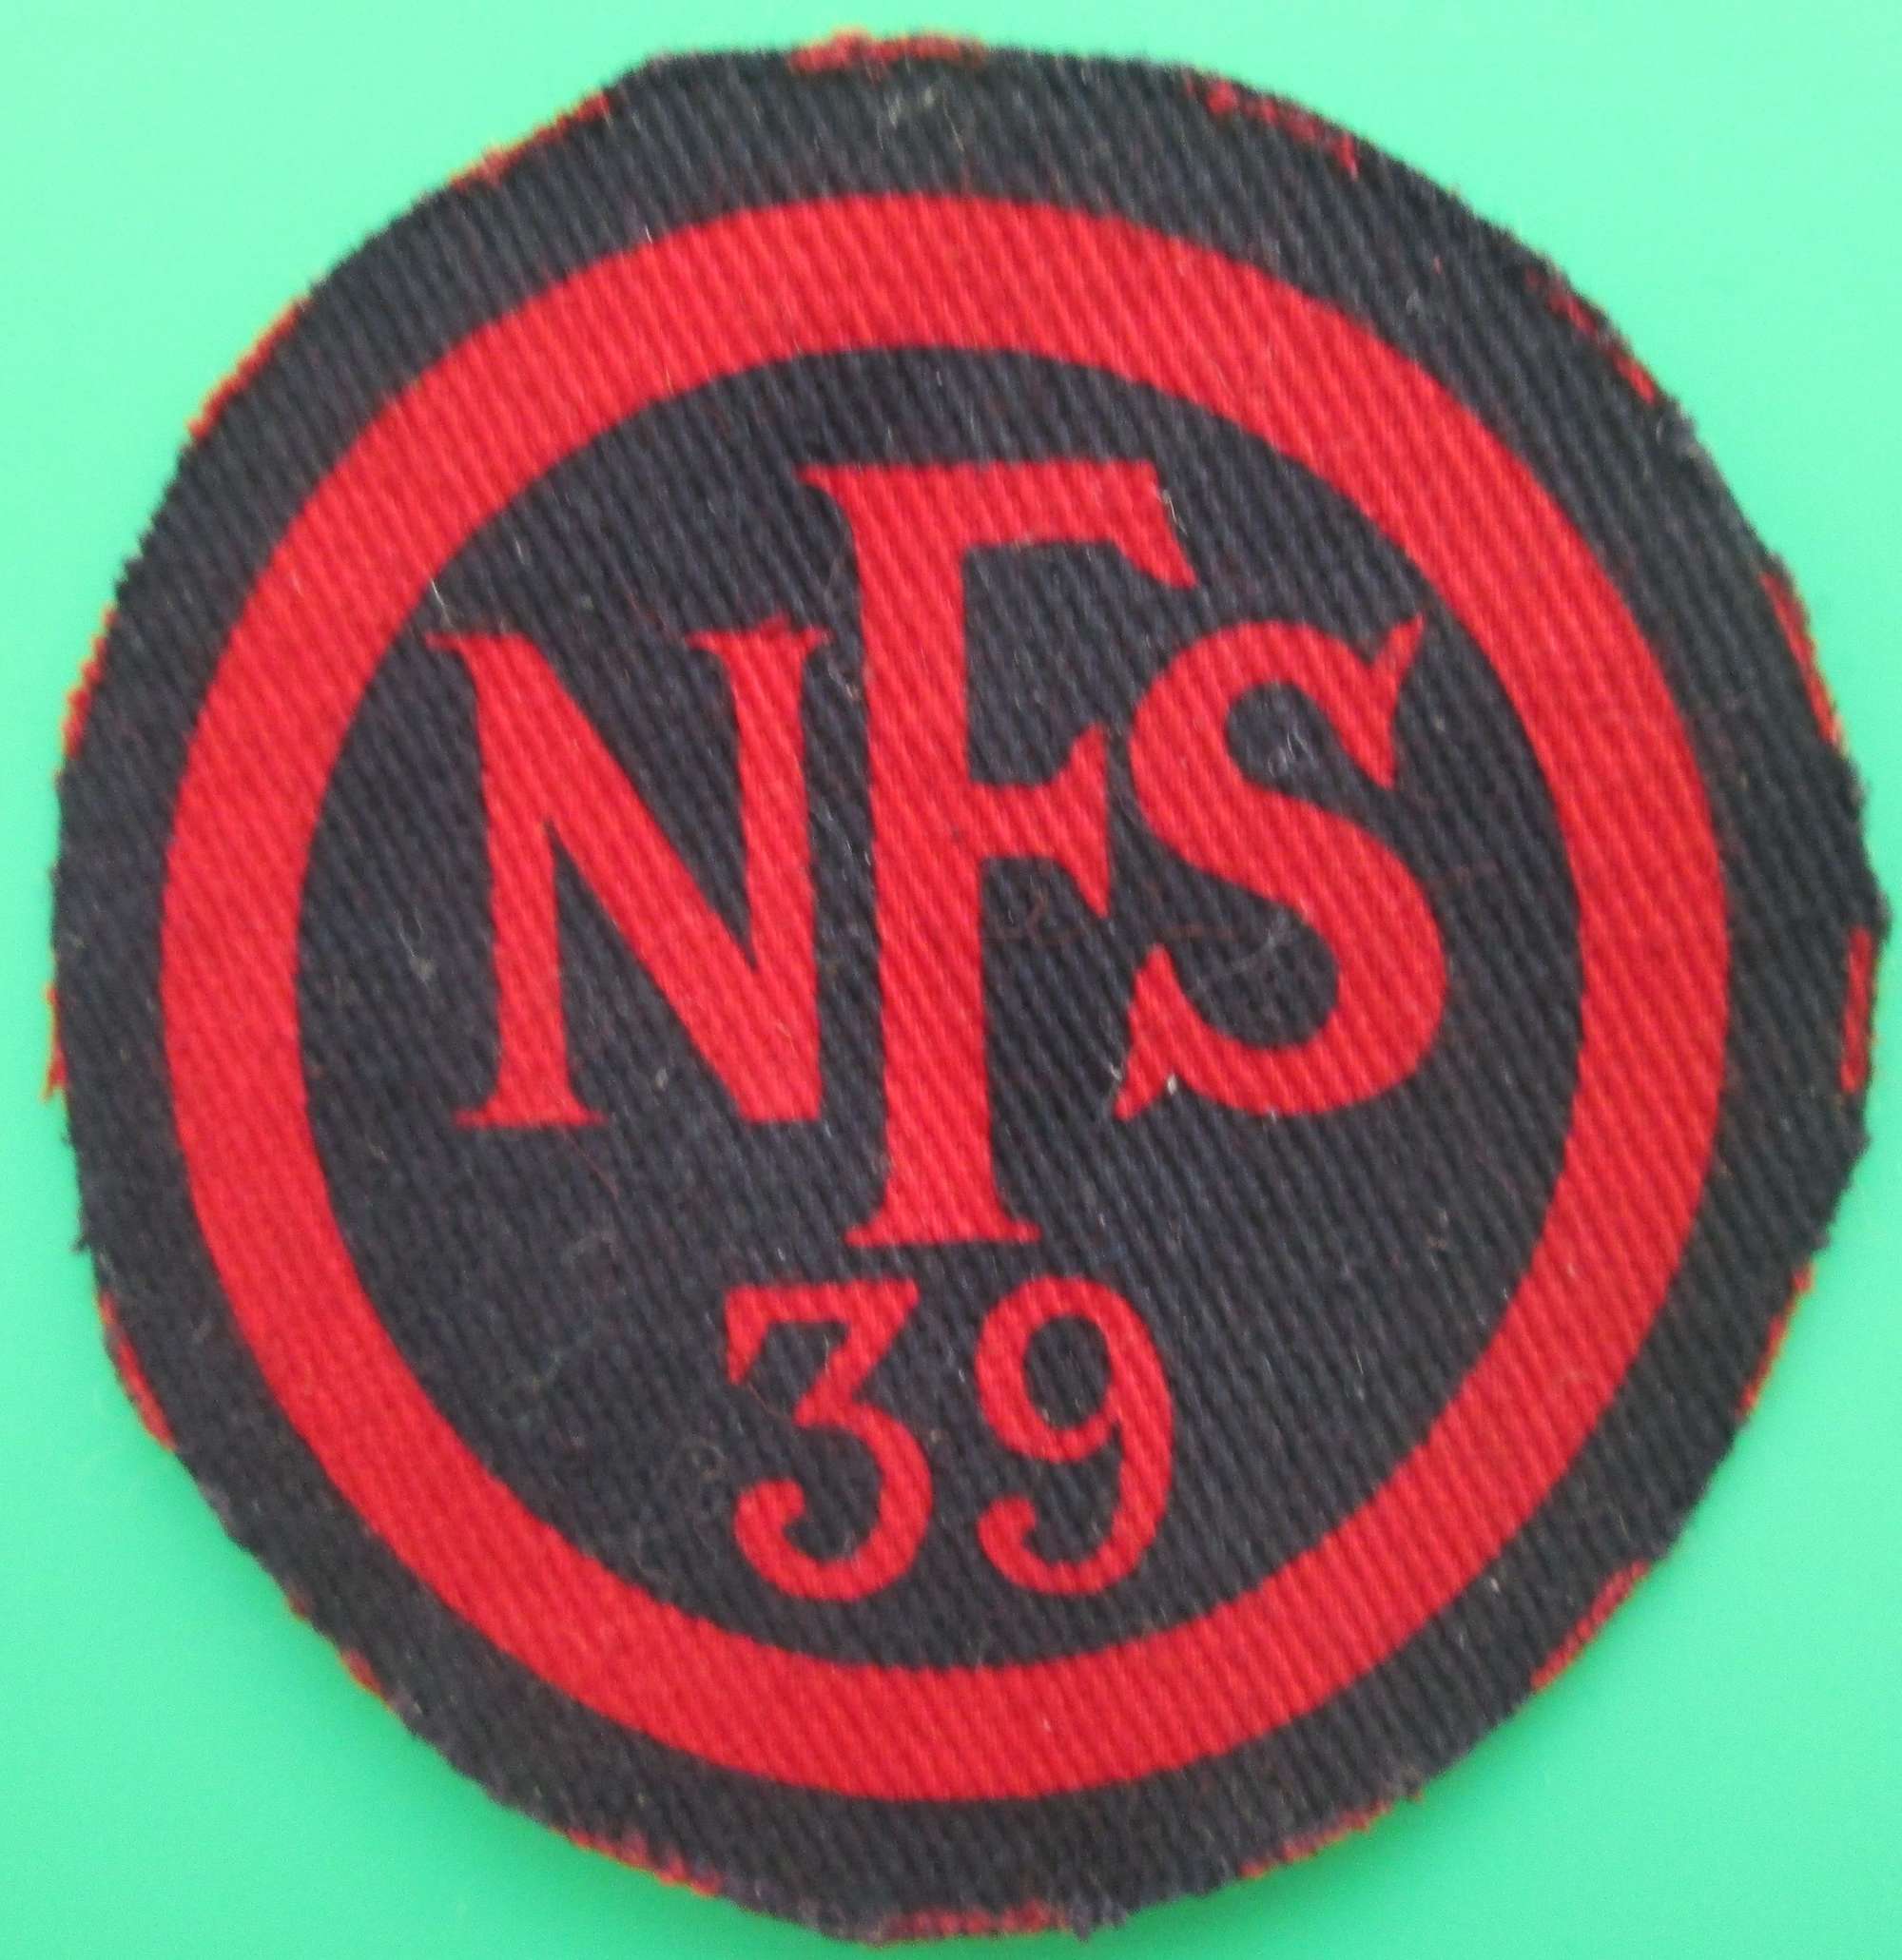 A NATIONAL FIRE SERVICE 39 PATCH